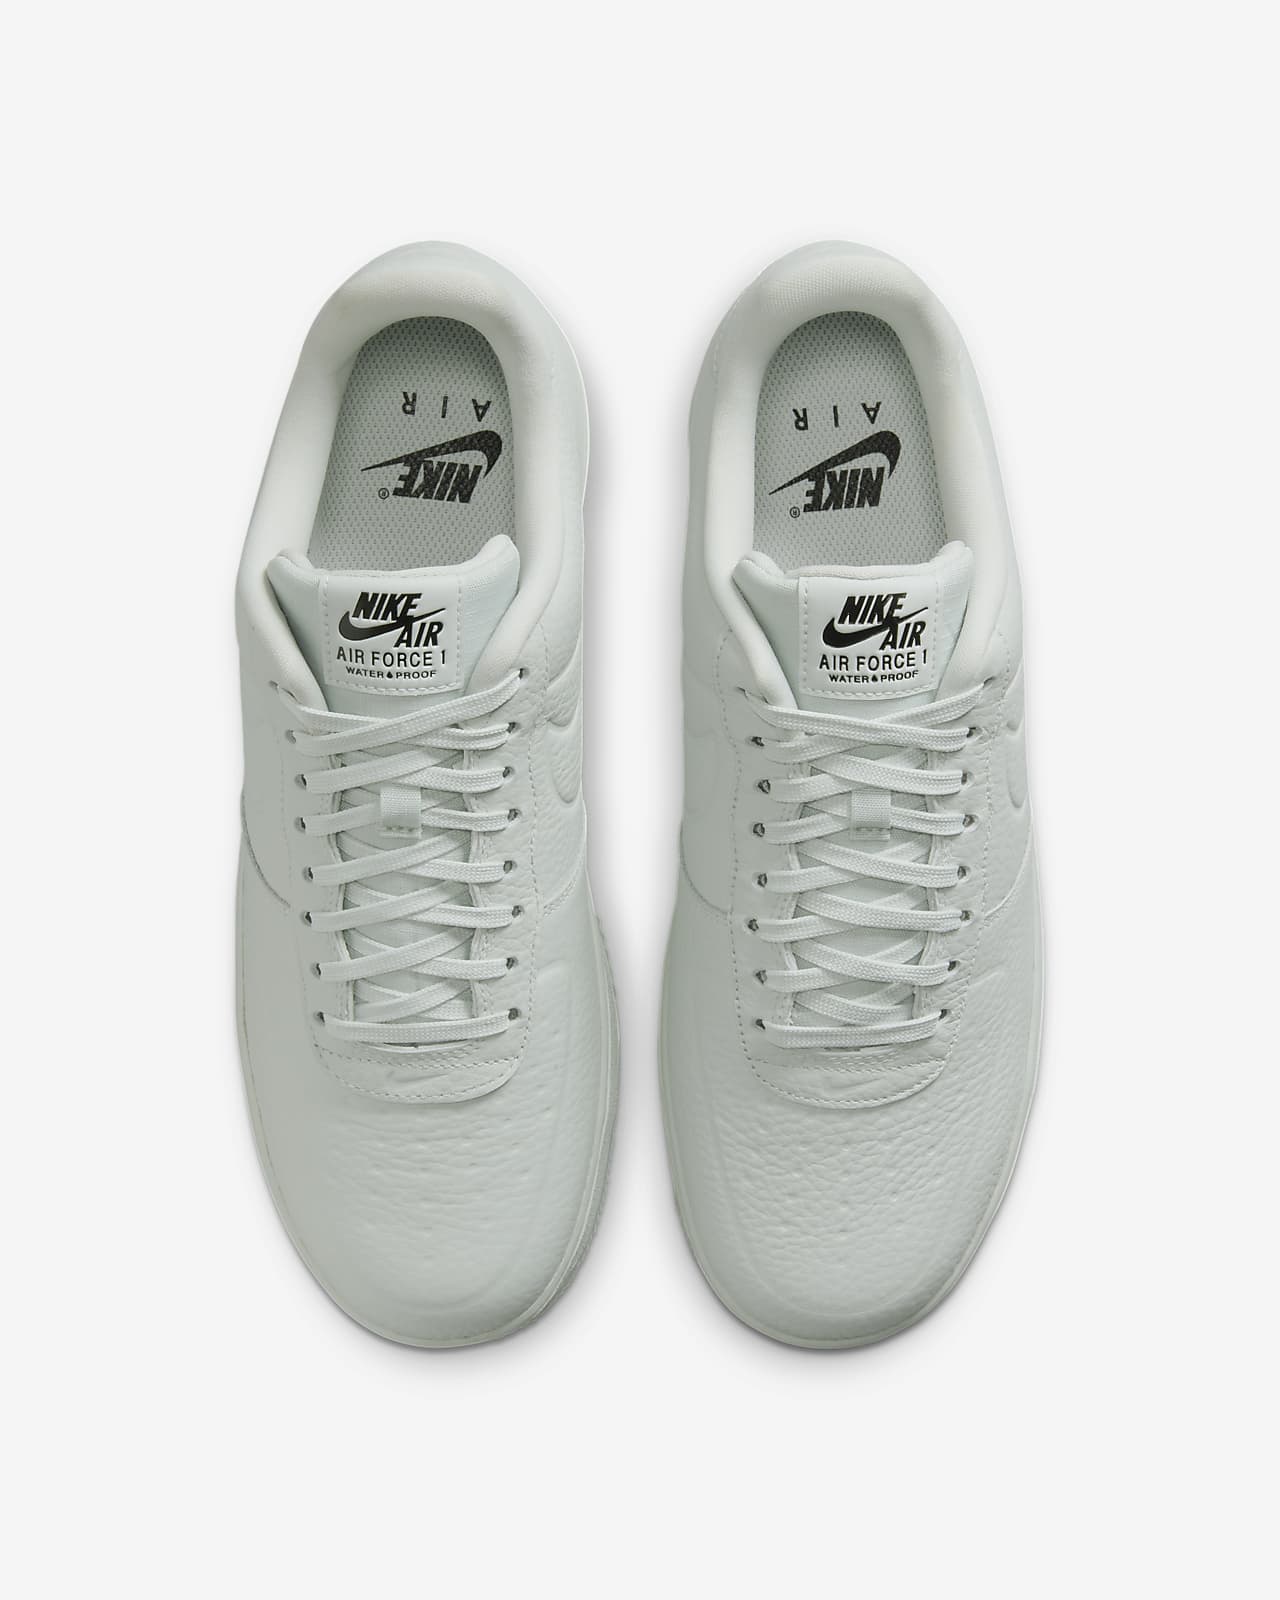 Nike Air Force 1 '07 Premium 2 'White Black